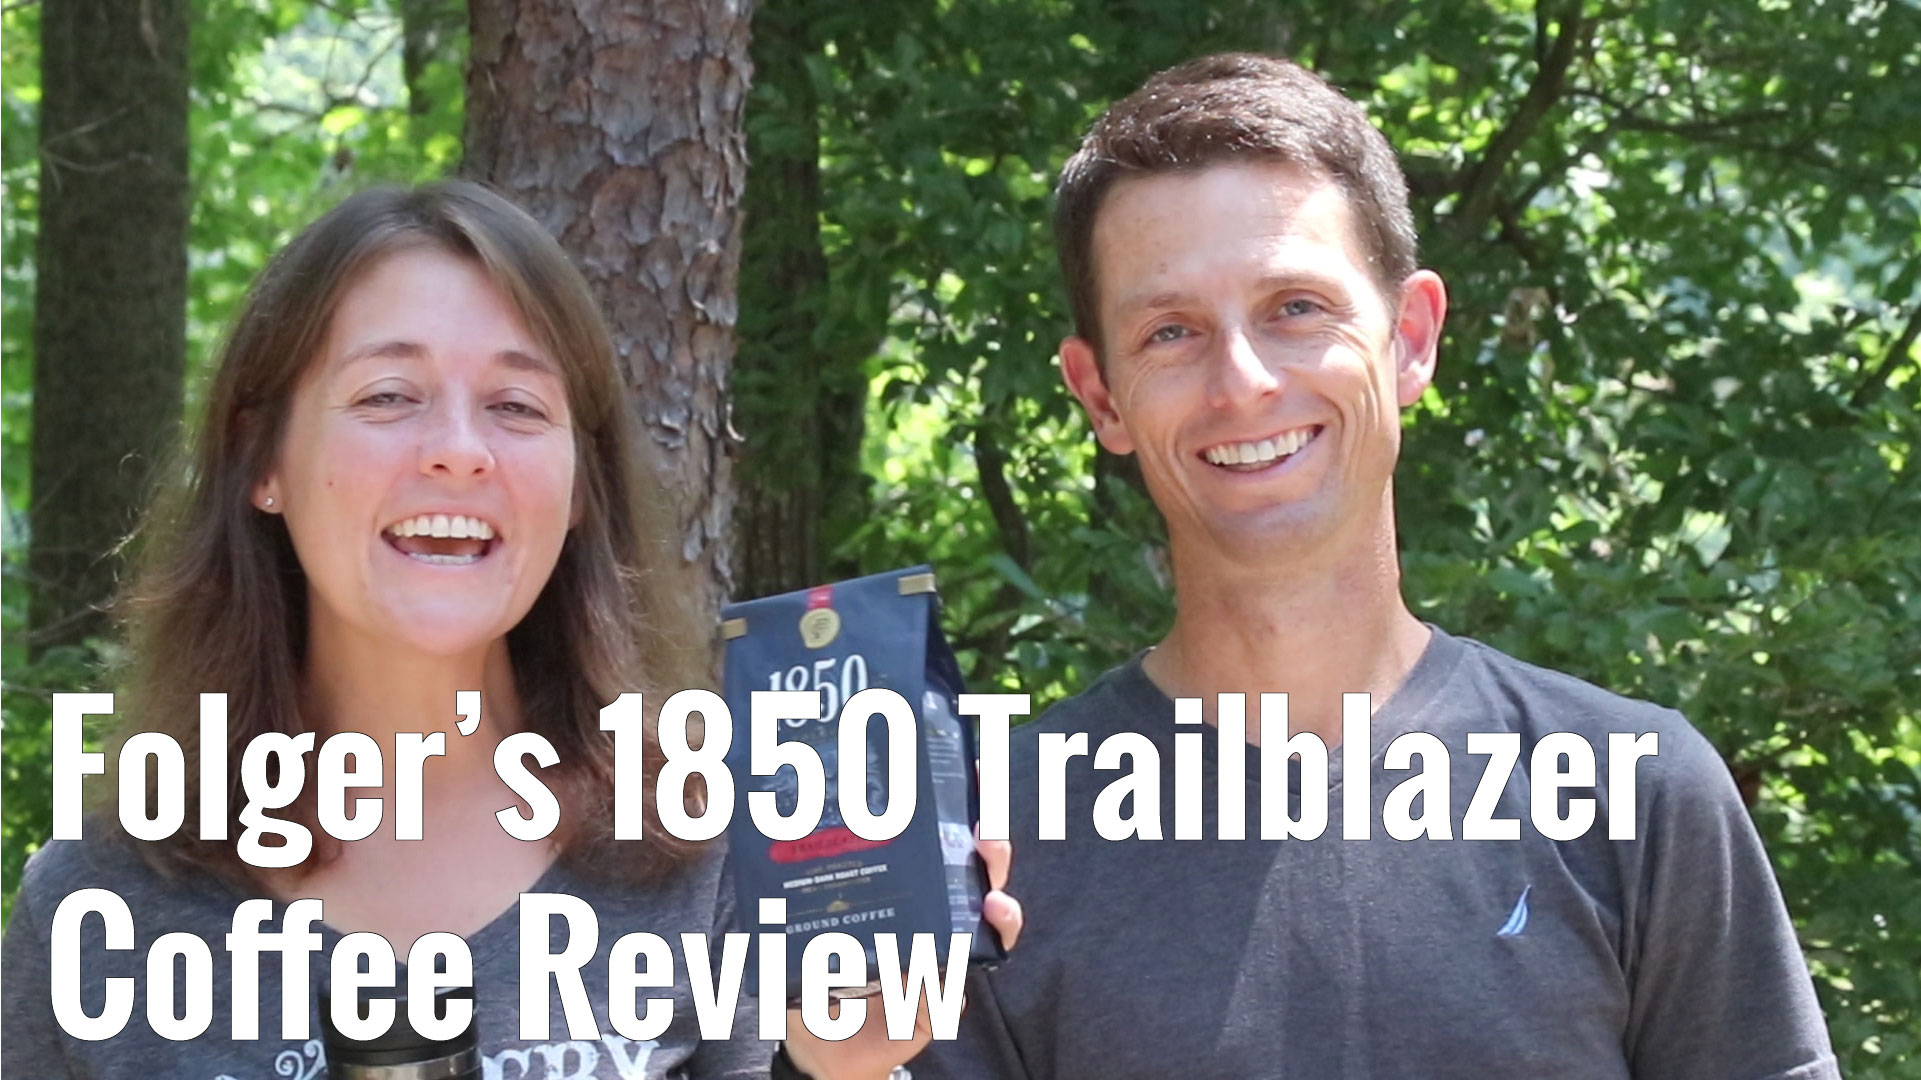 Video review of Folgers 1850 Trailblazer coffee